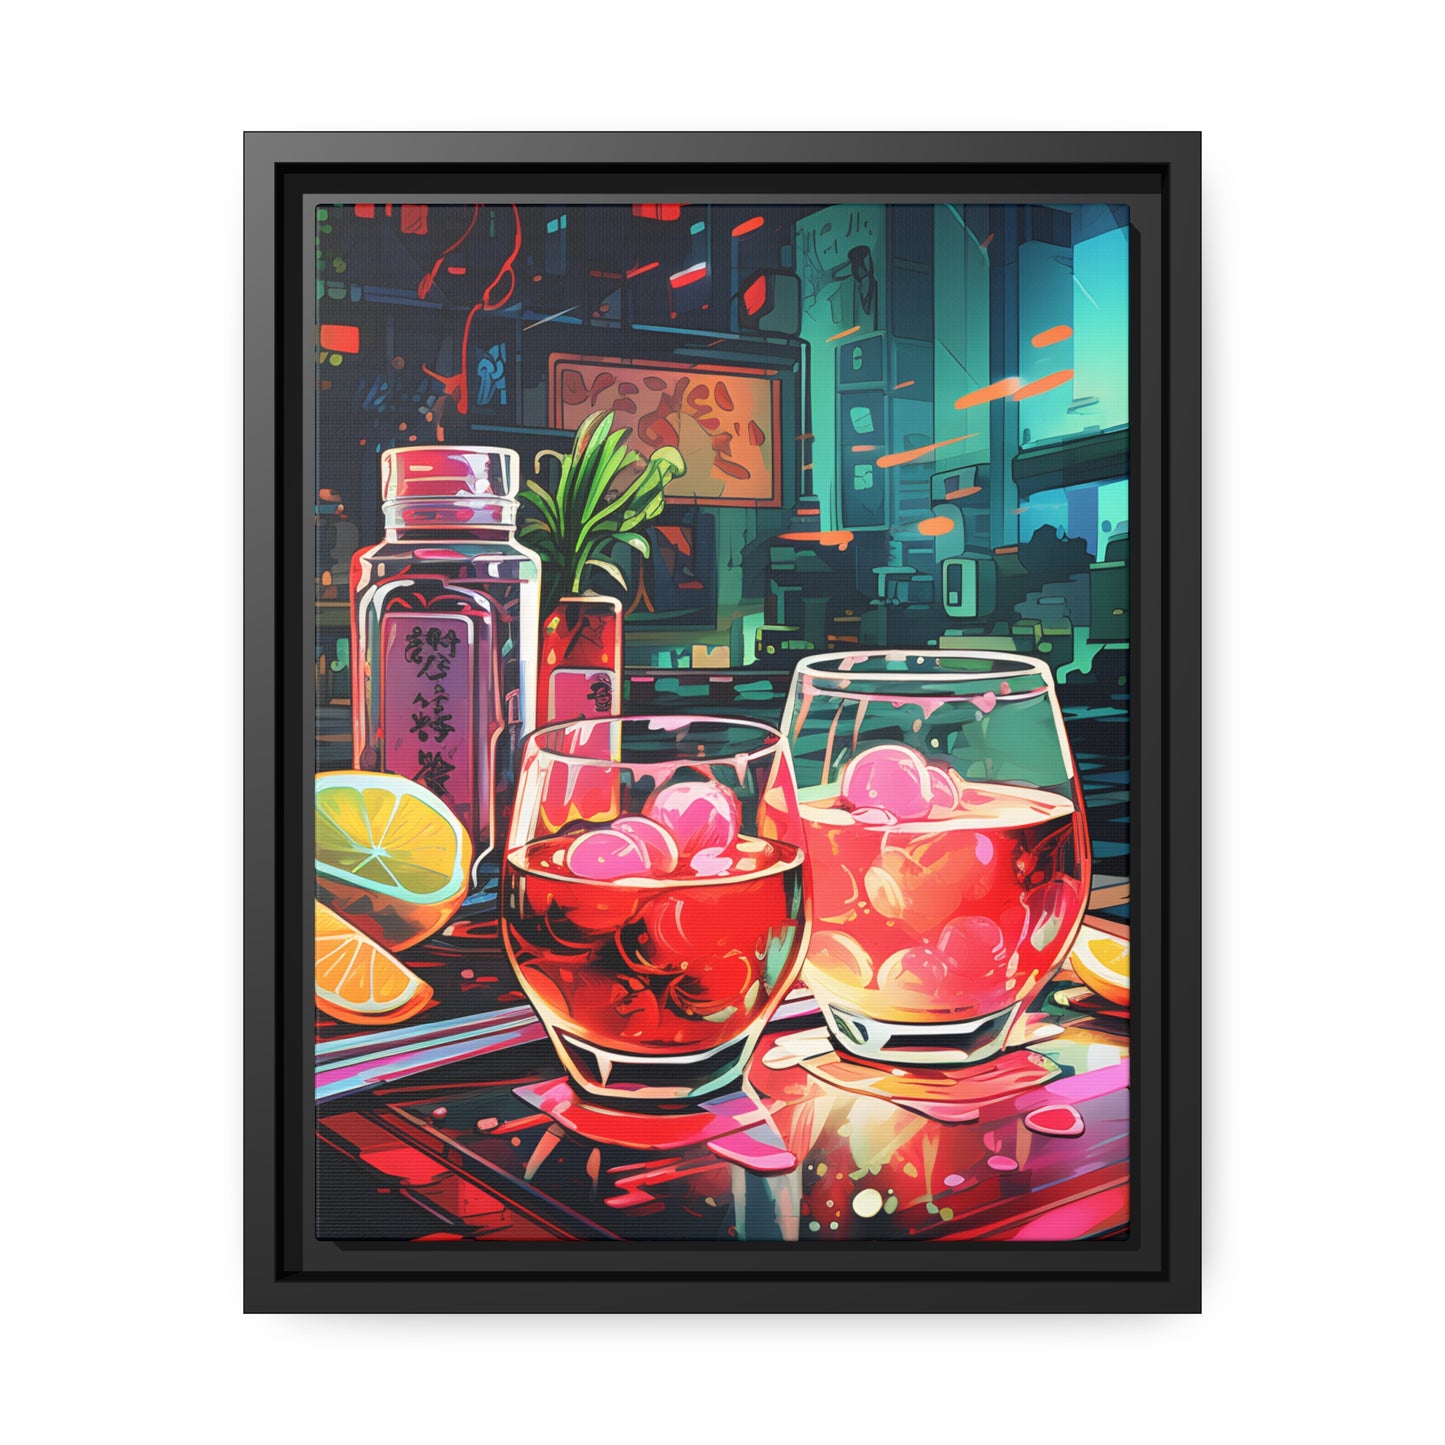 Framed Canvas Artwork Japanese Manga Style Alcohol And Night Life Bar Art Alcoholic Drink With Ice And Lemon Slice Floating Frame Canvas Neon Light Bar Artwork Urban Setting Lifestyle